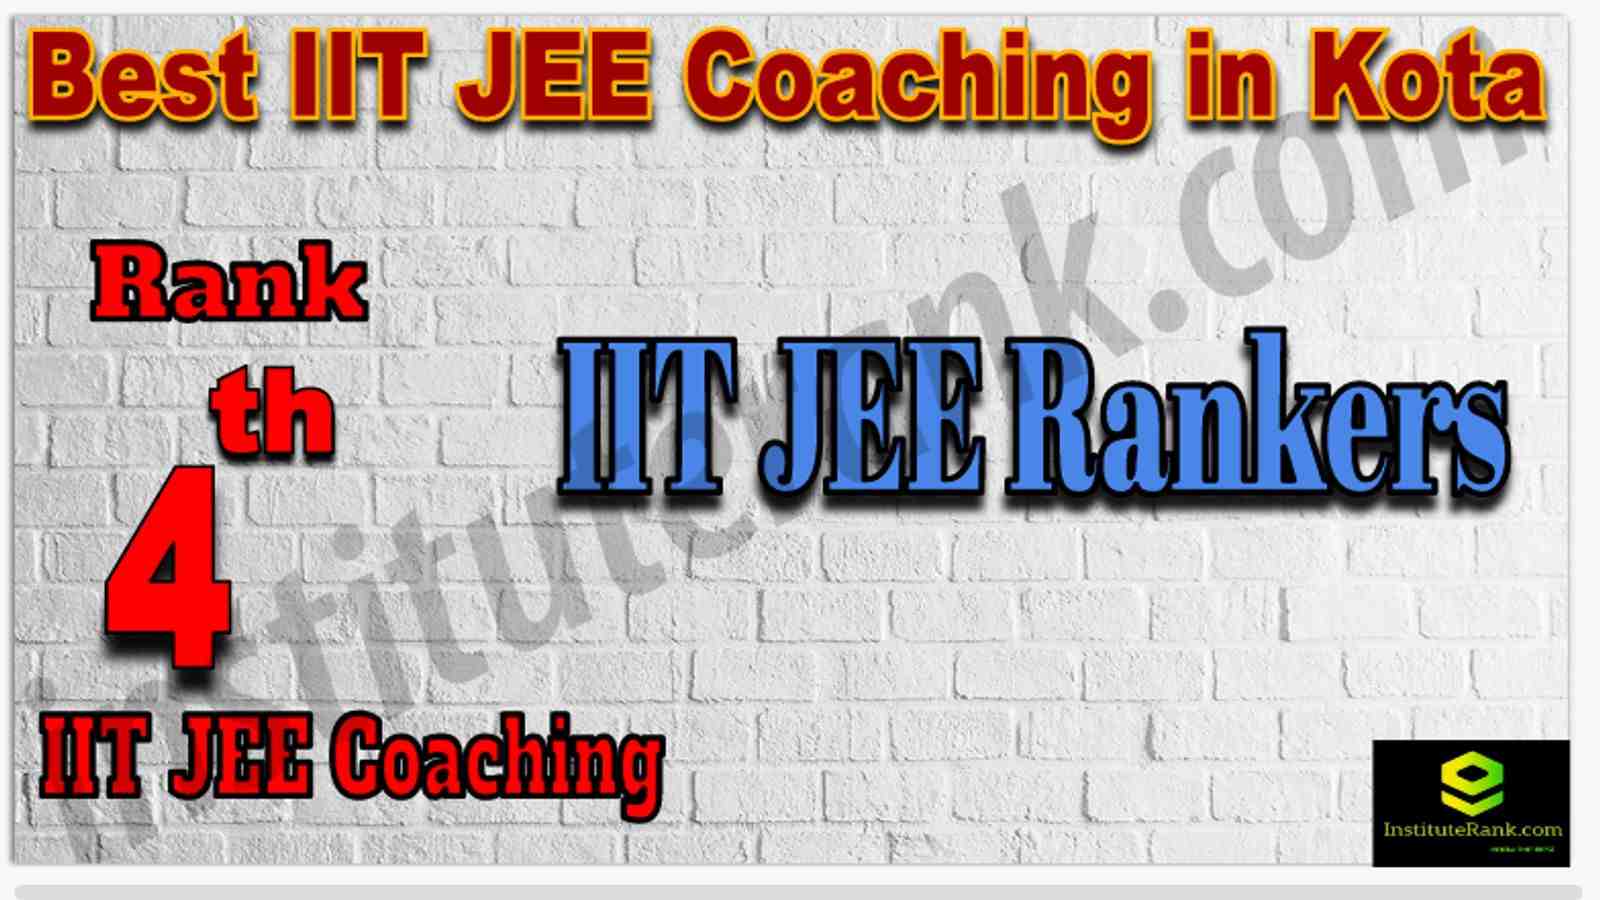 Rank 4th Best IIT JEE Coaching in Kota